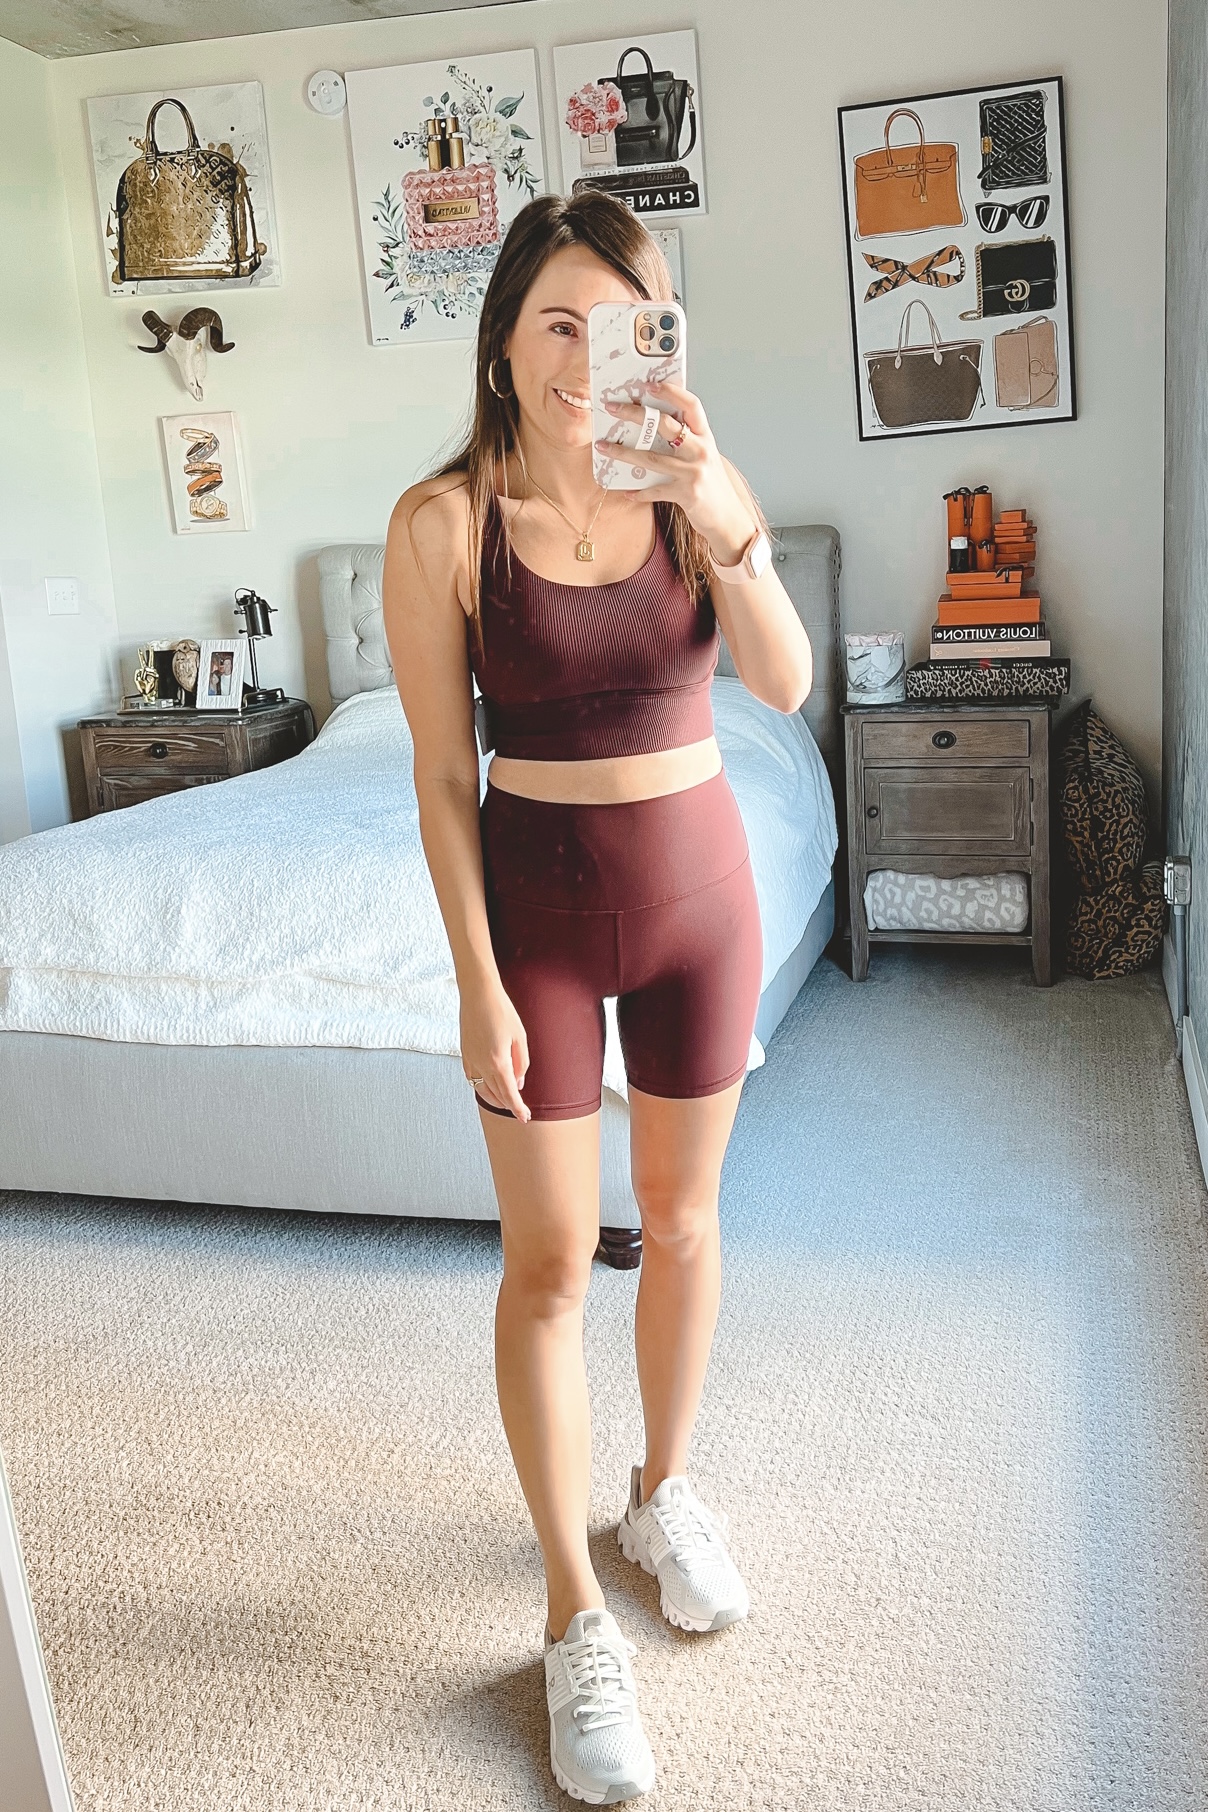 Lulu Align Shorts 4 Inch Inseam